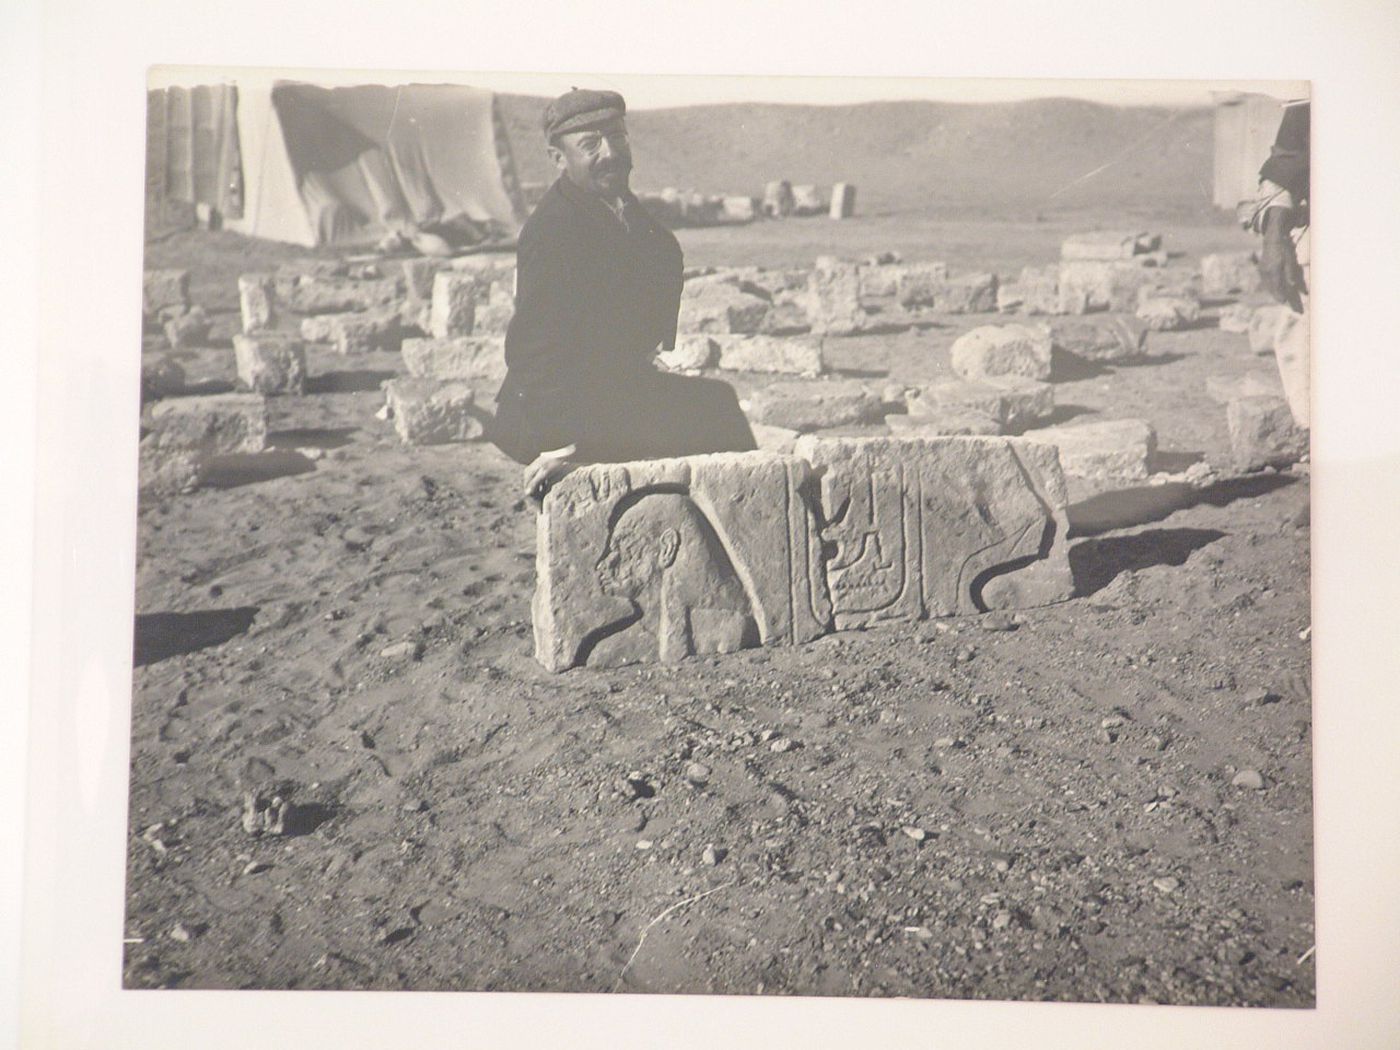 Men sitting on a stone with hieroglyphics, Egypt